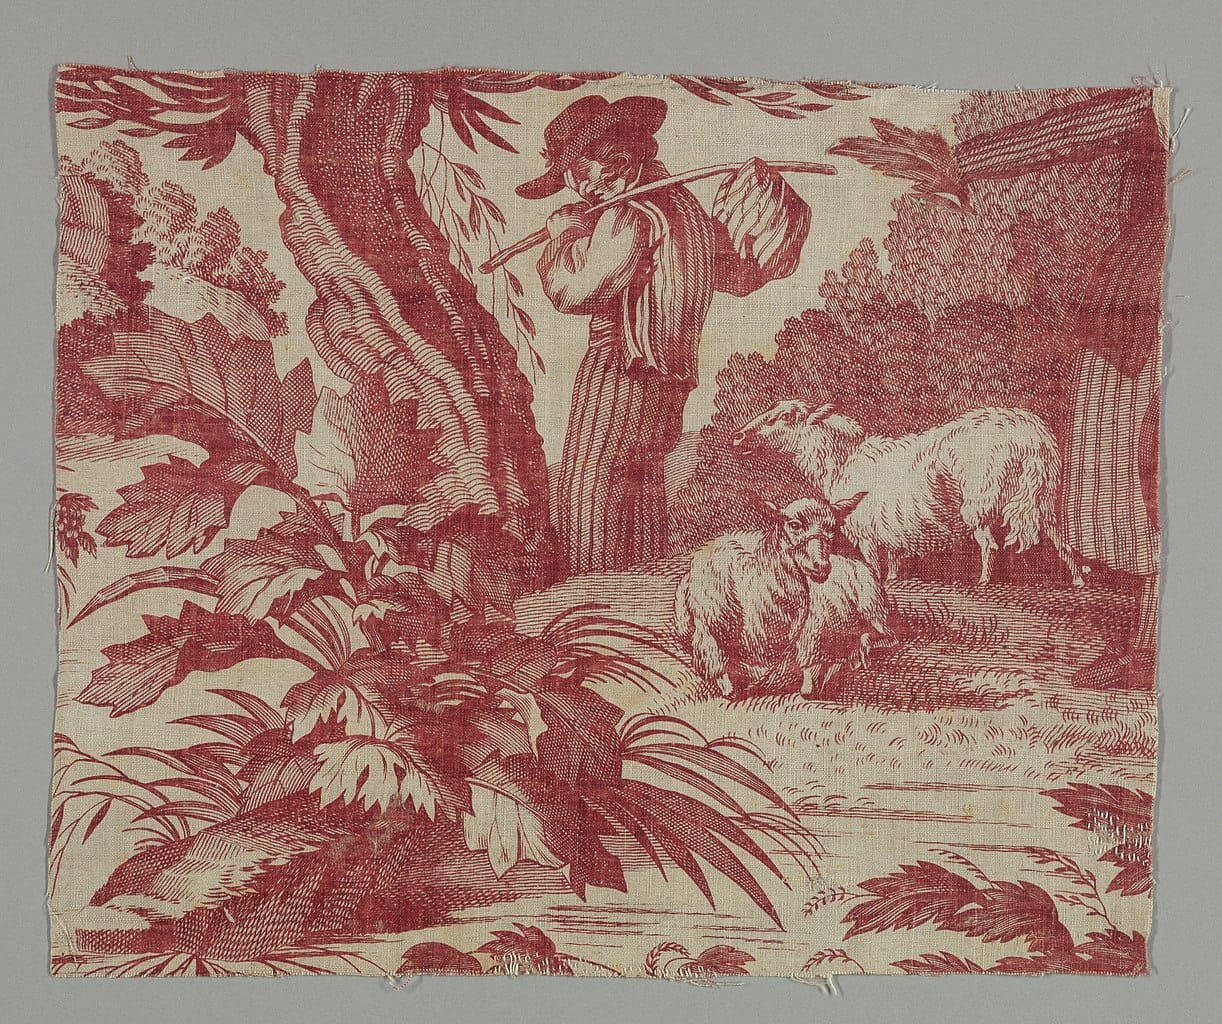 Pastoral textile scene, unknown artist